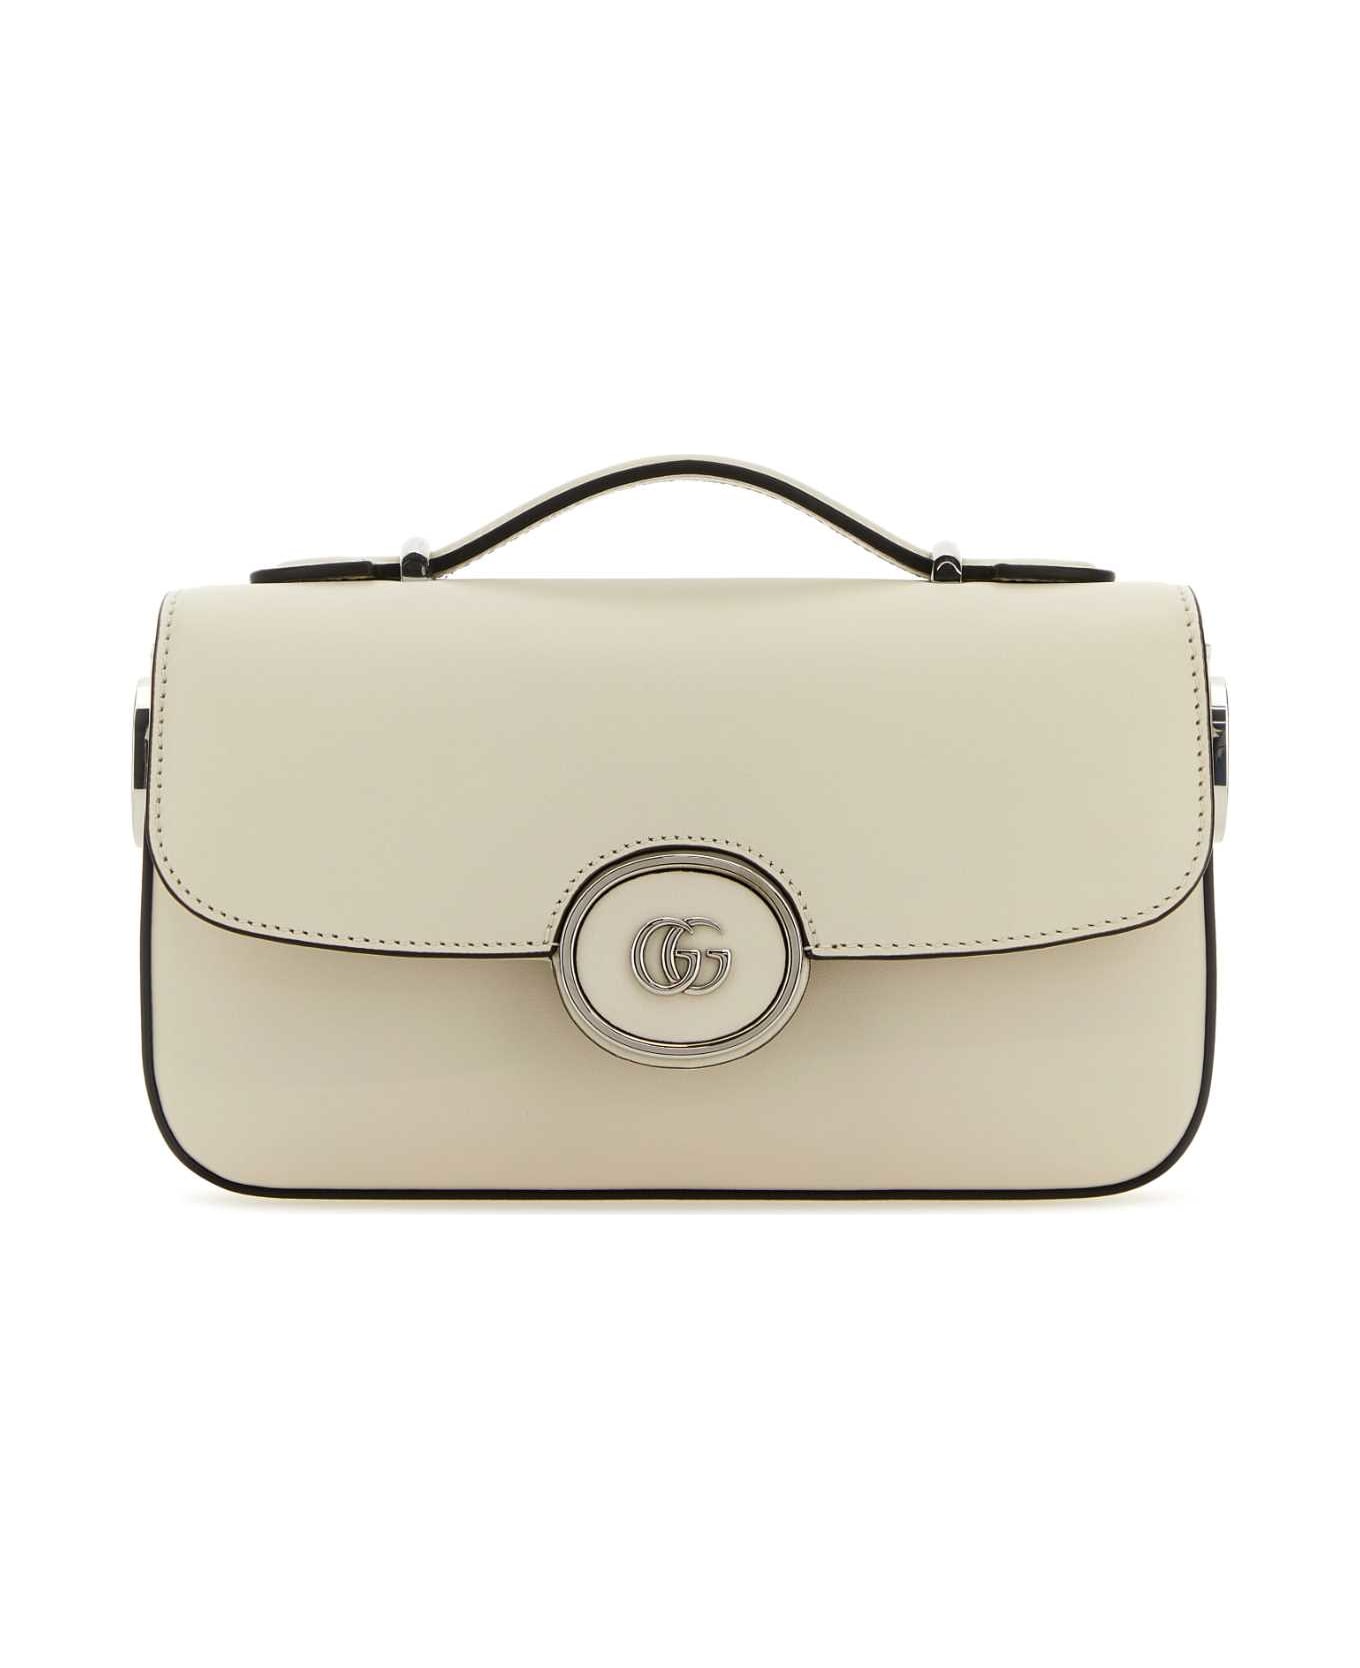 Gucci Ivory Leather Mini Petite Gg Handbag - MYSTICWHITE